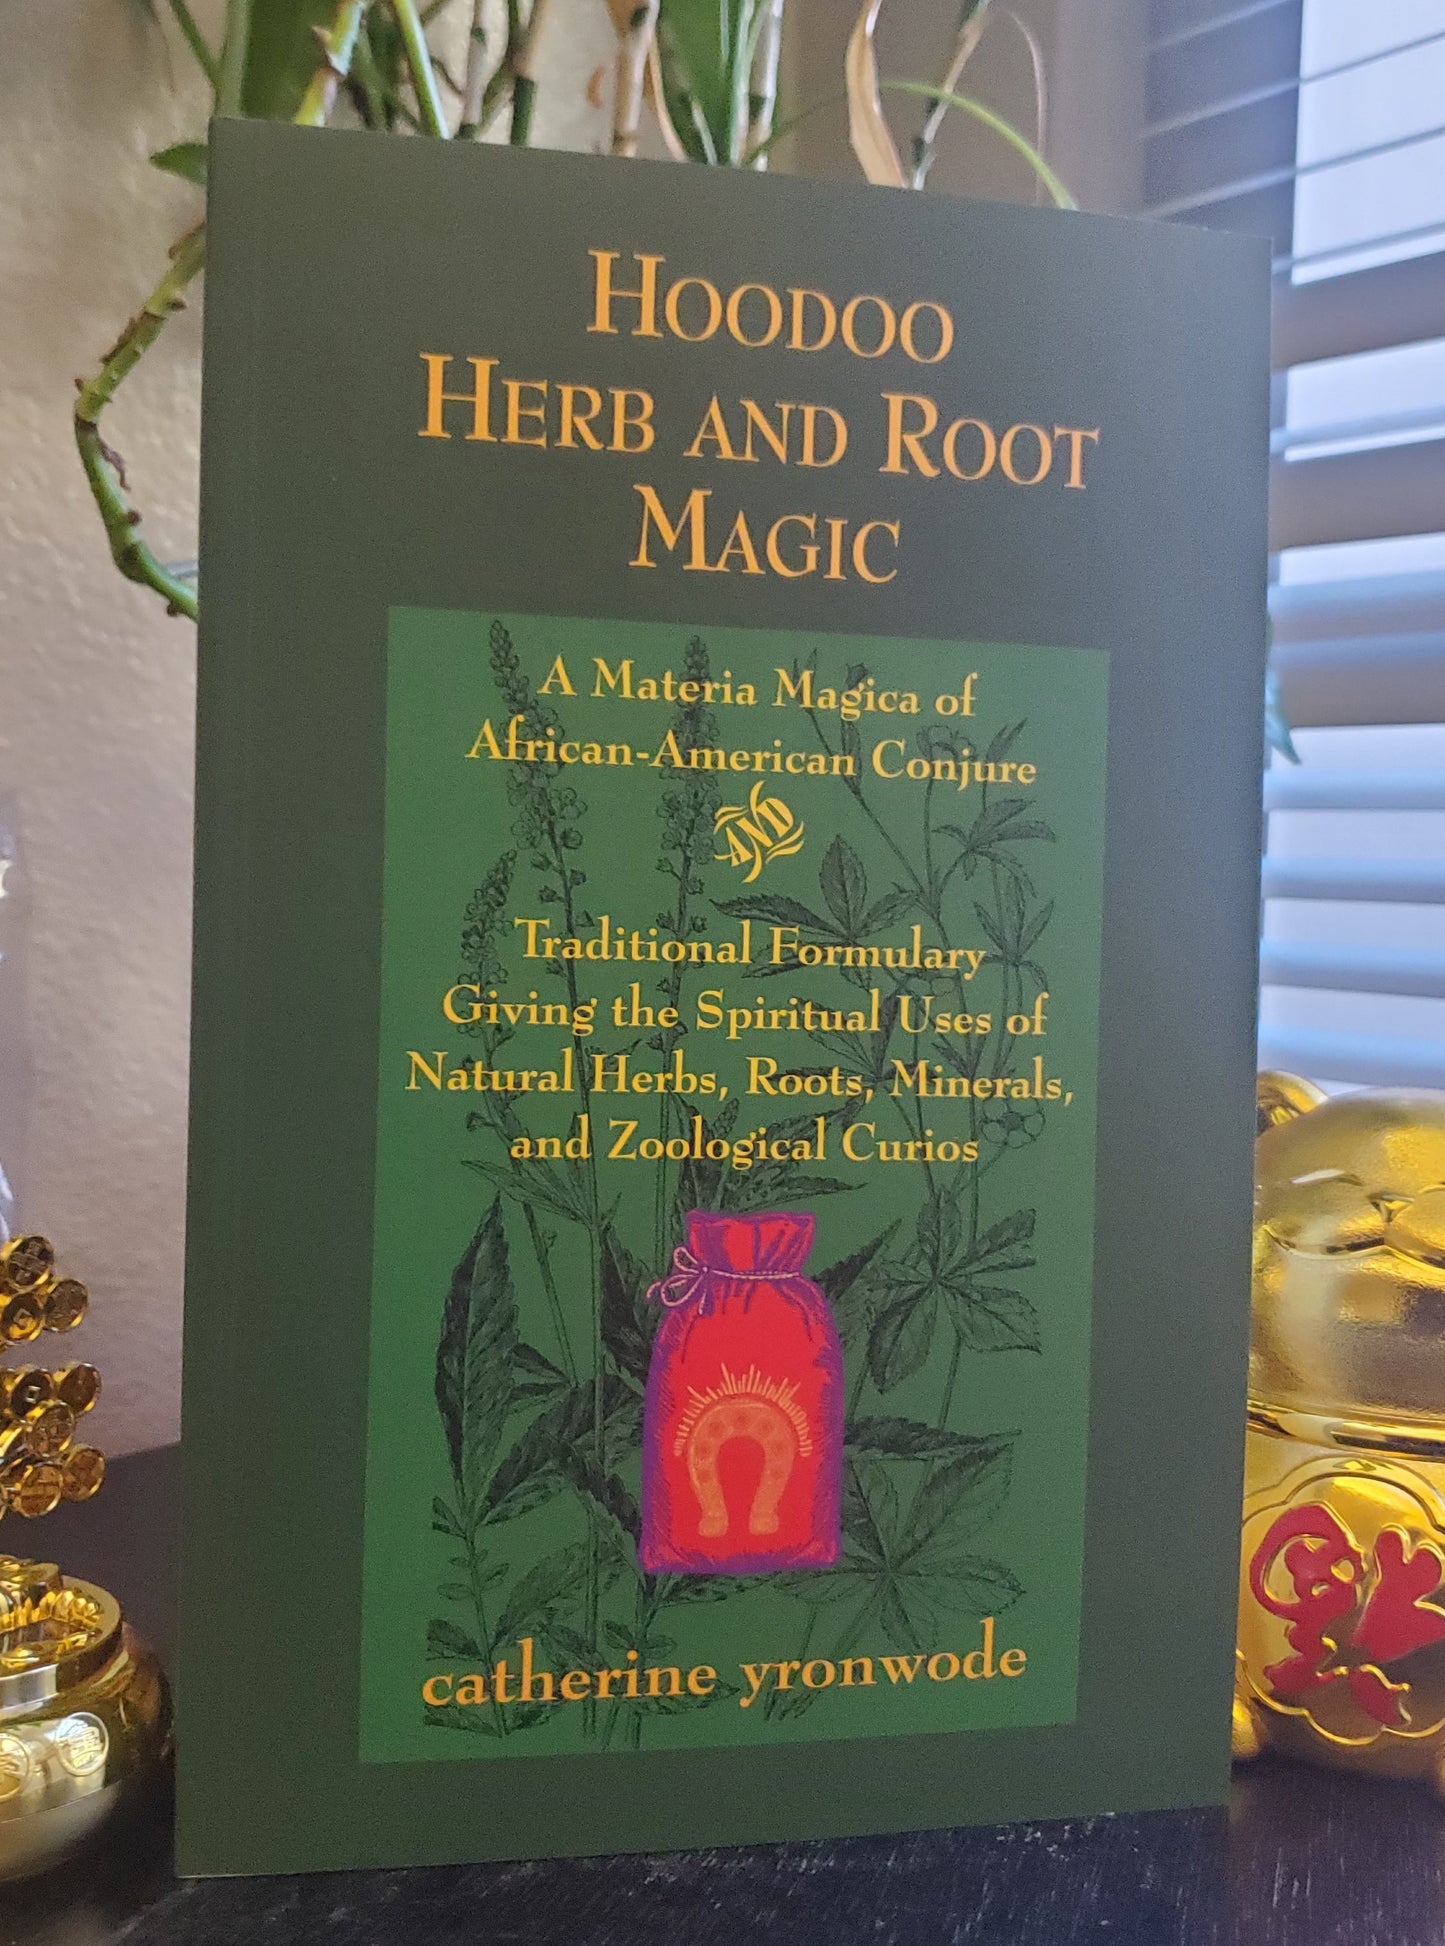 Hoodoo Herb and Root Magic by Catherine Yronwode #MustHave for #HoodooPractitioners #Hoodoo #Conjure